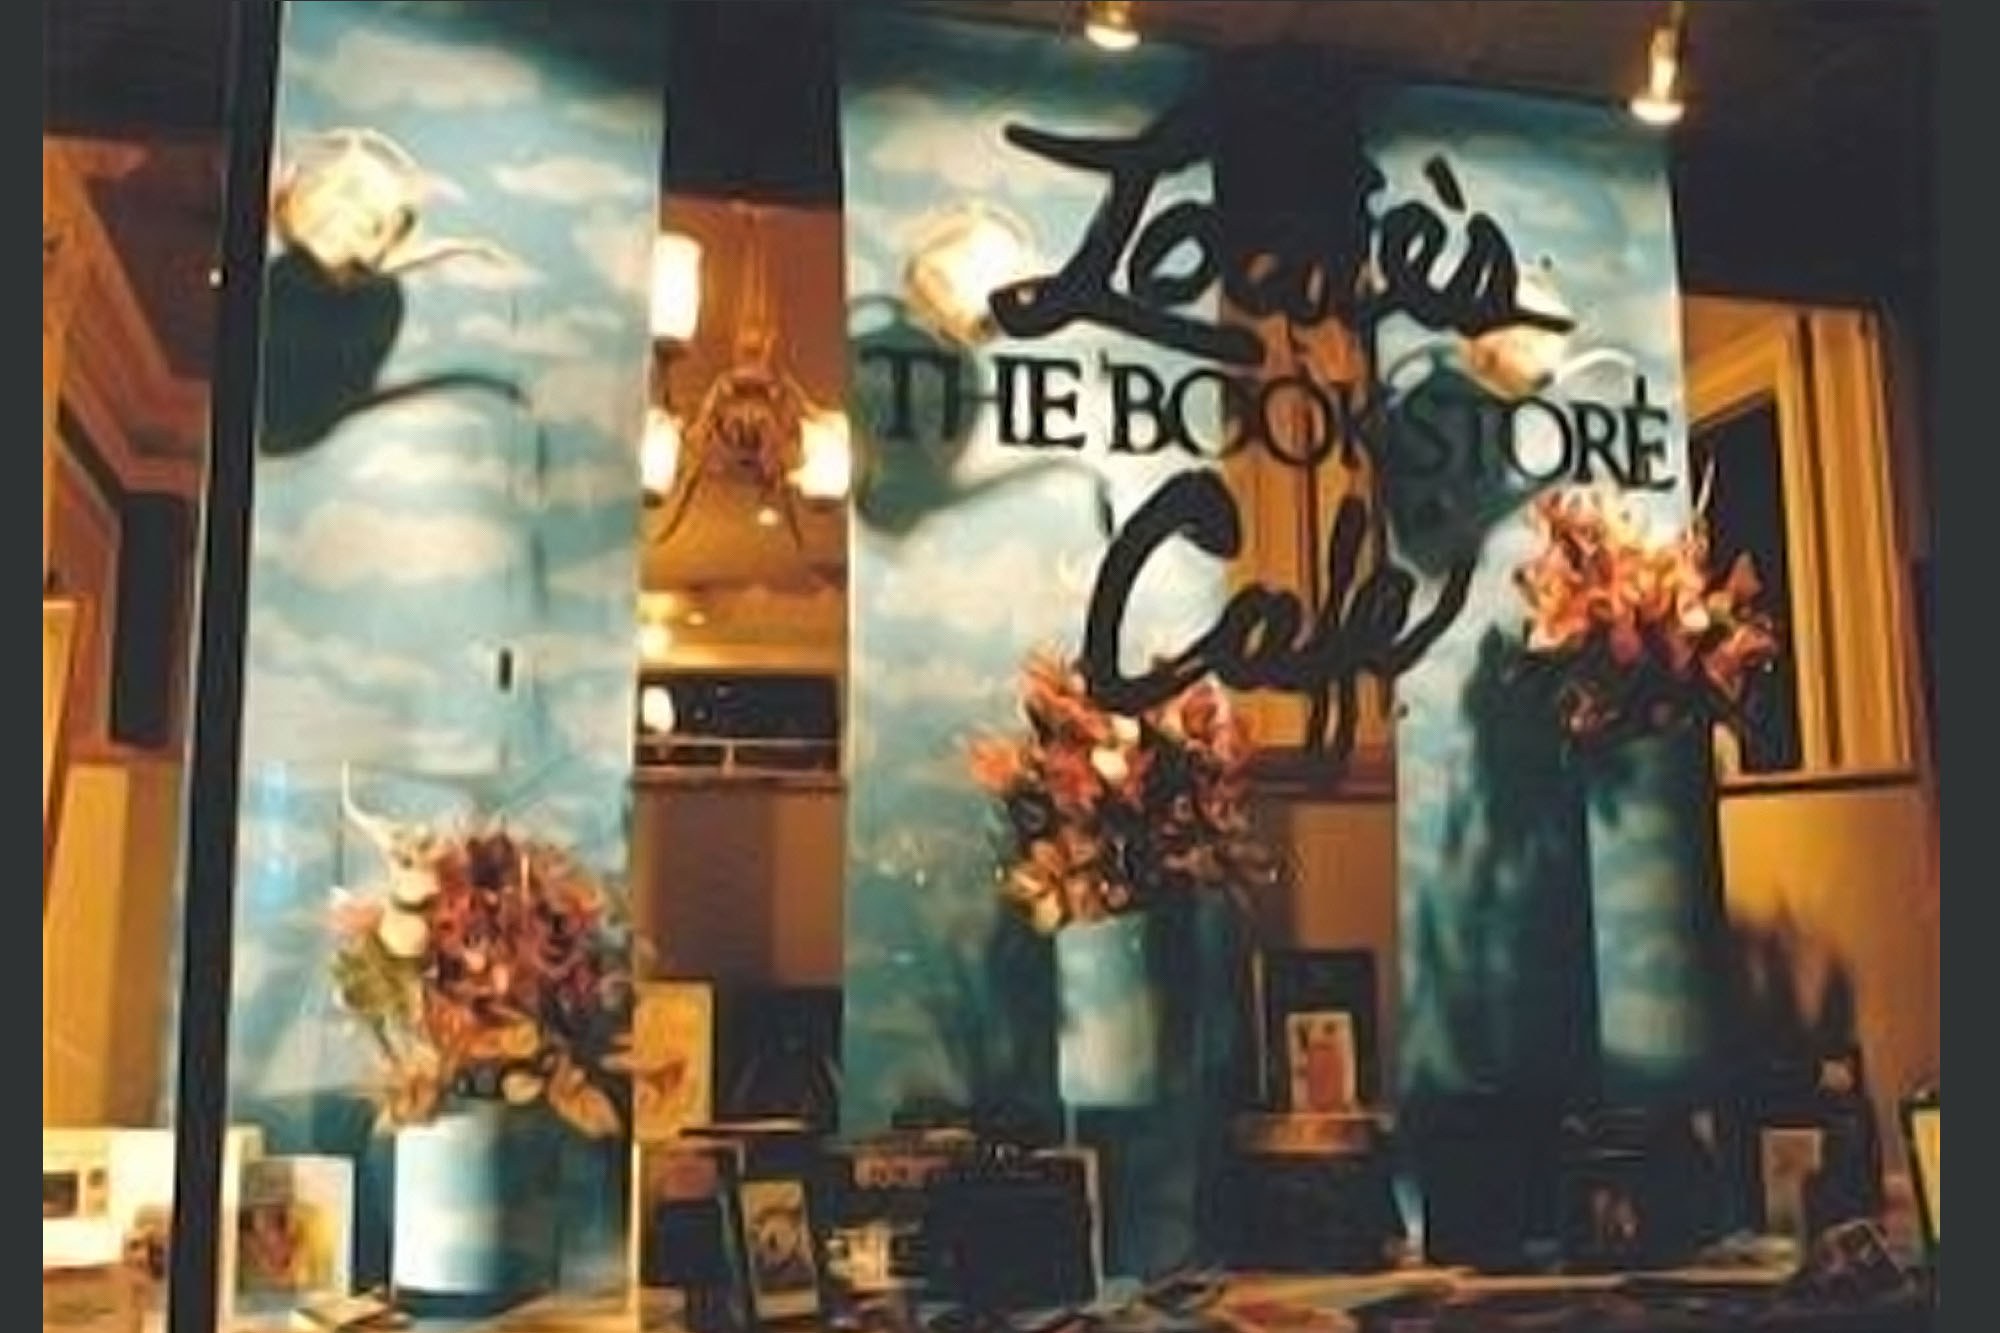 Louie Bros Book Store - Shop Chinatown